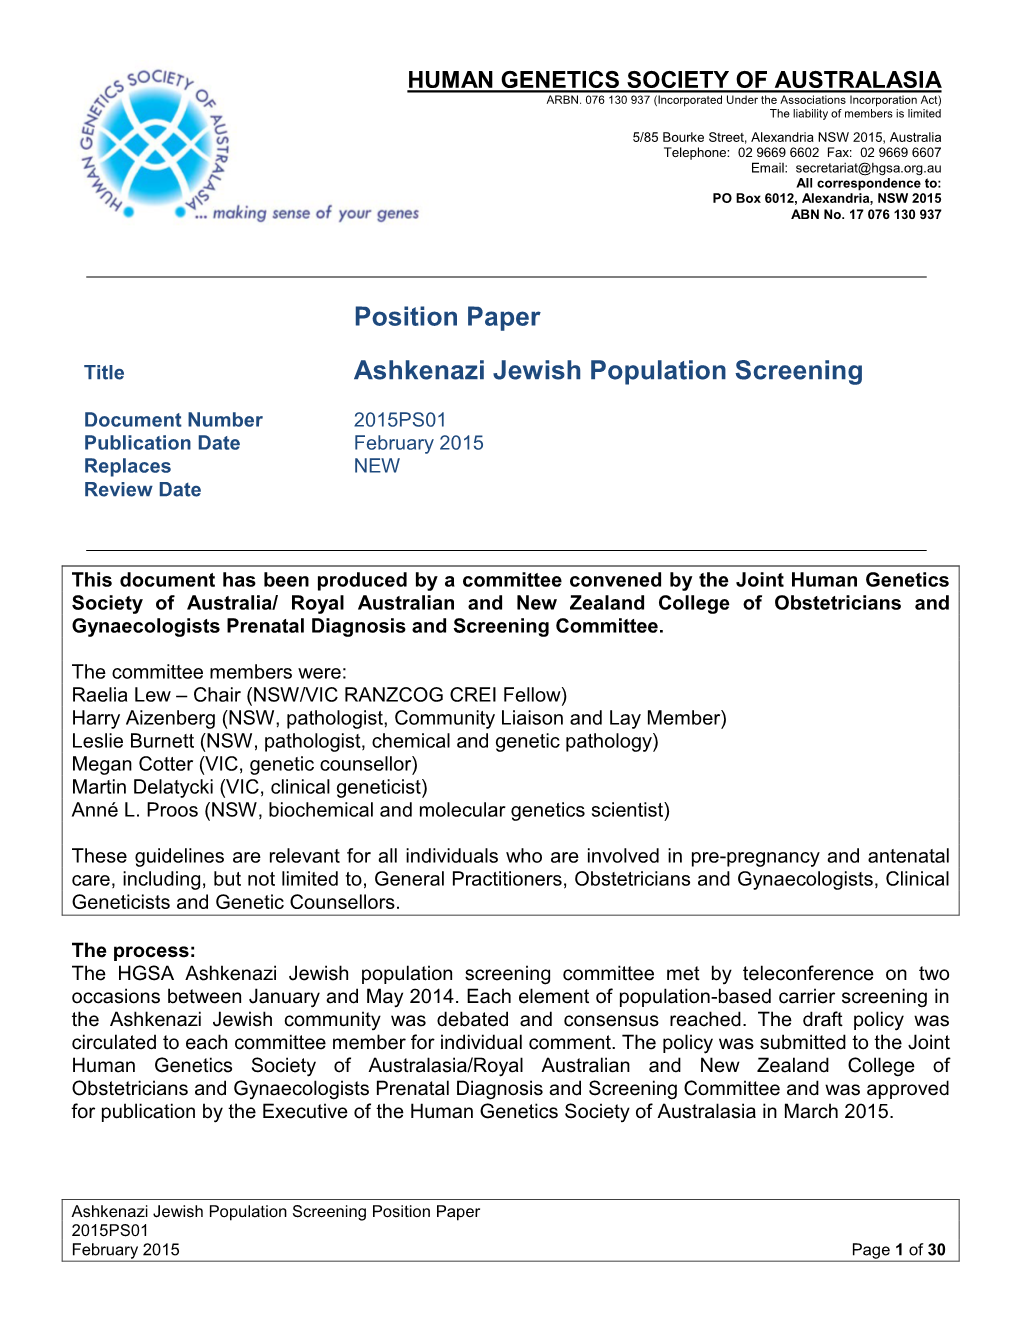 Position Paper Ashkenazi Jewish Population Screening